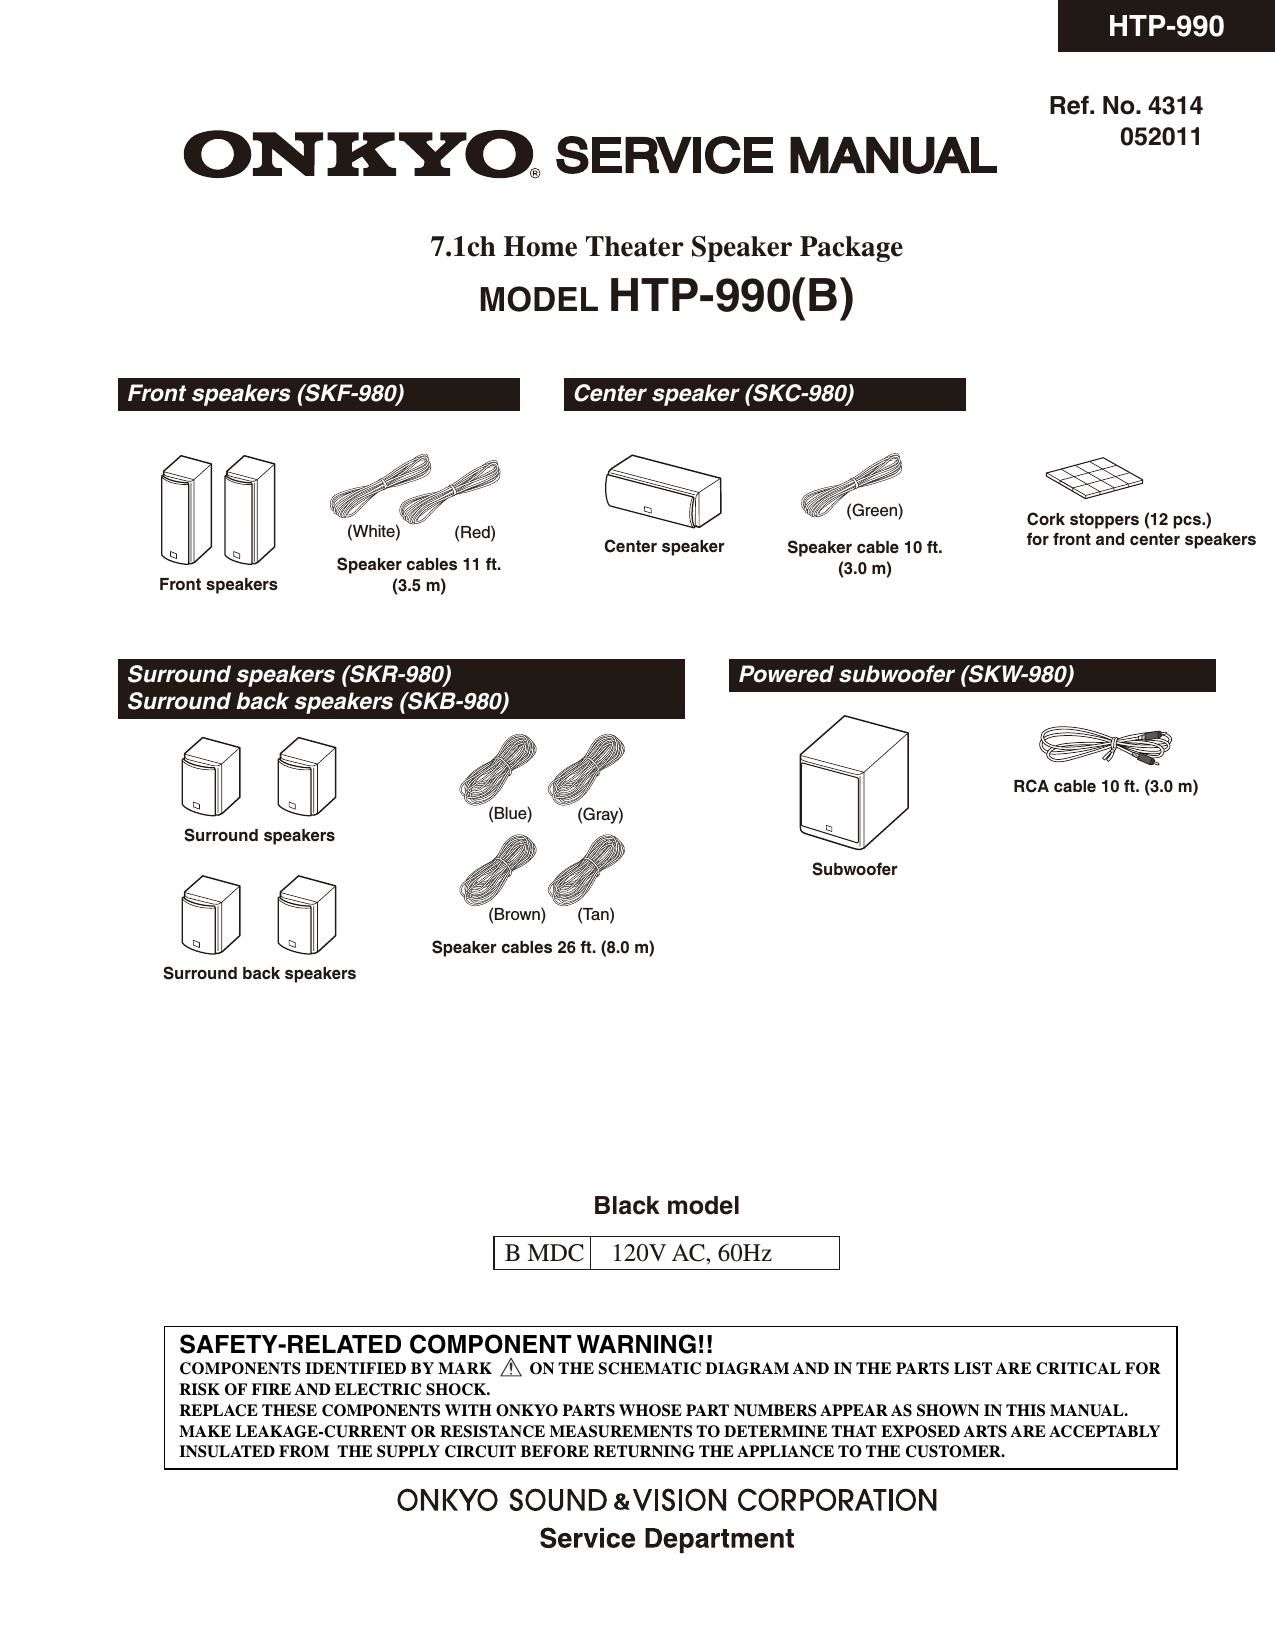 Onkyo HTP 990 Service Manual